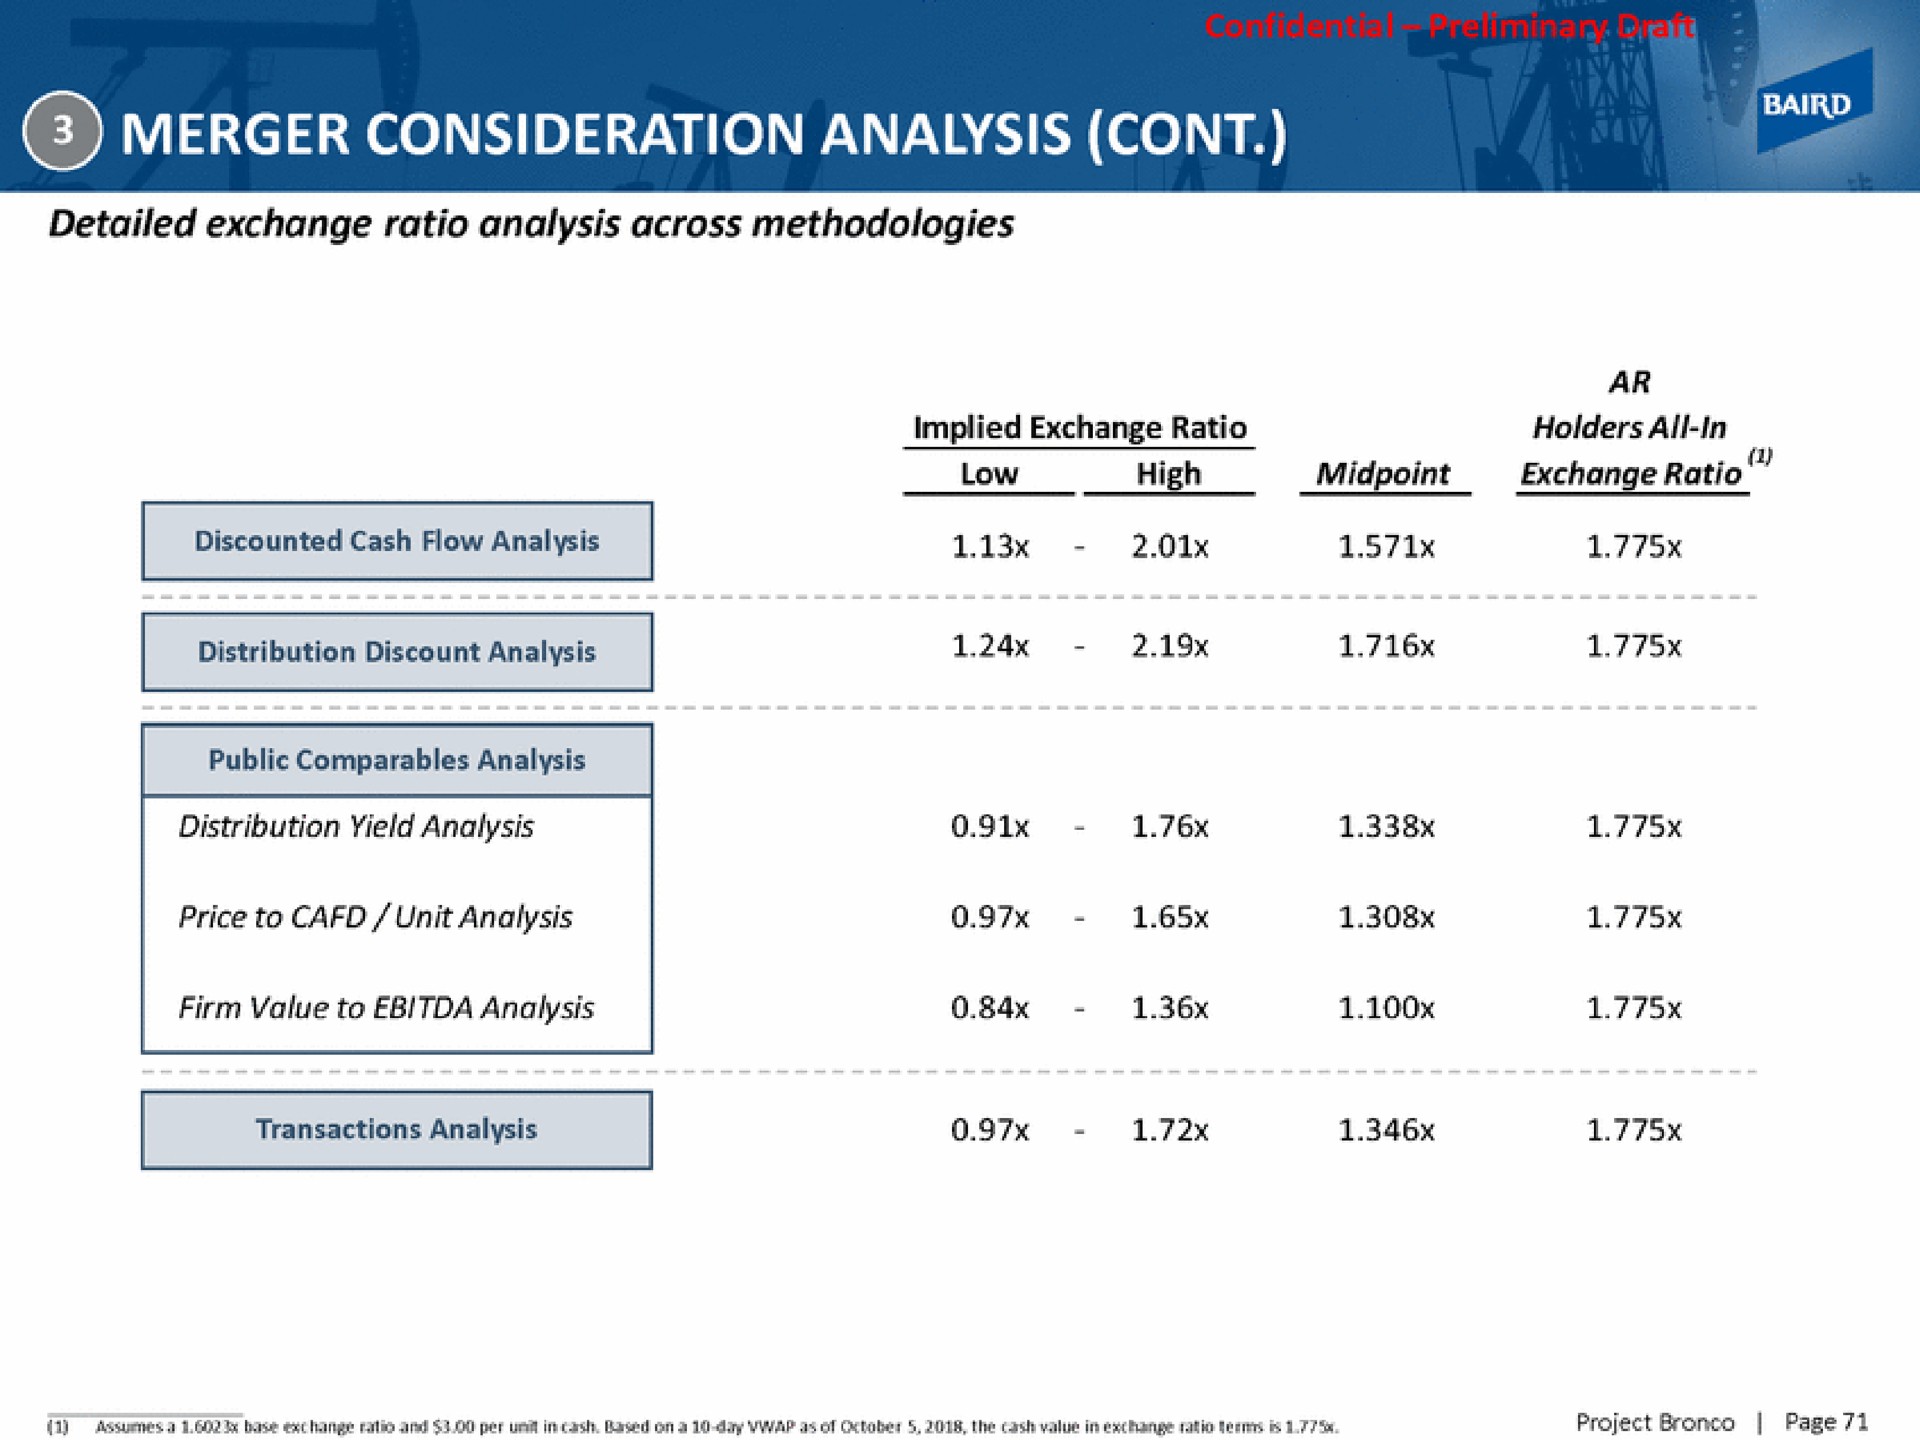 merger consideration analysis | Baird